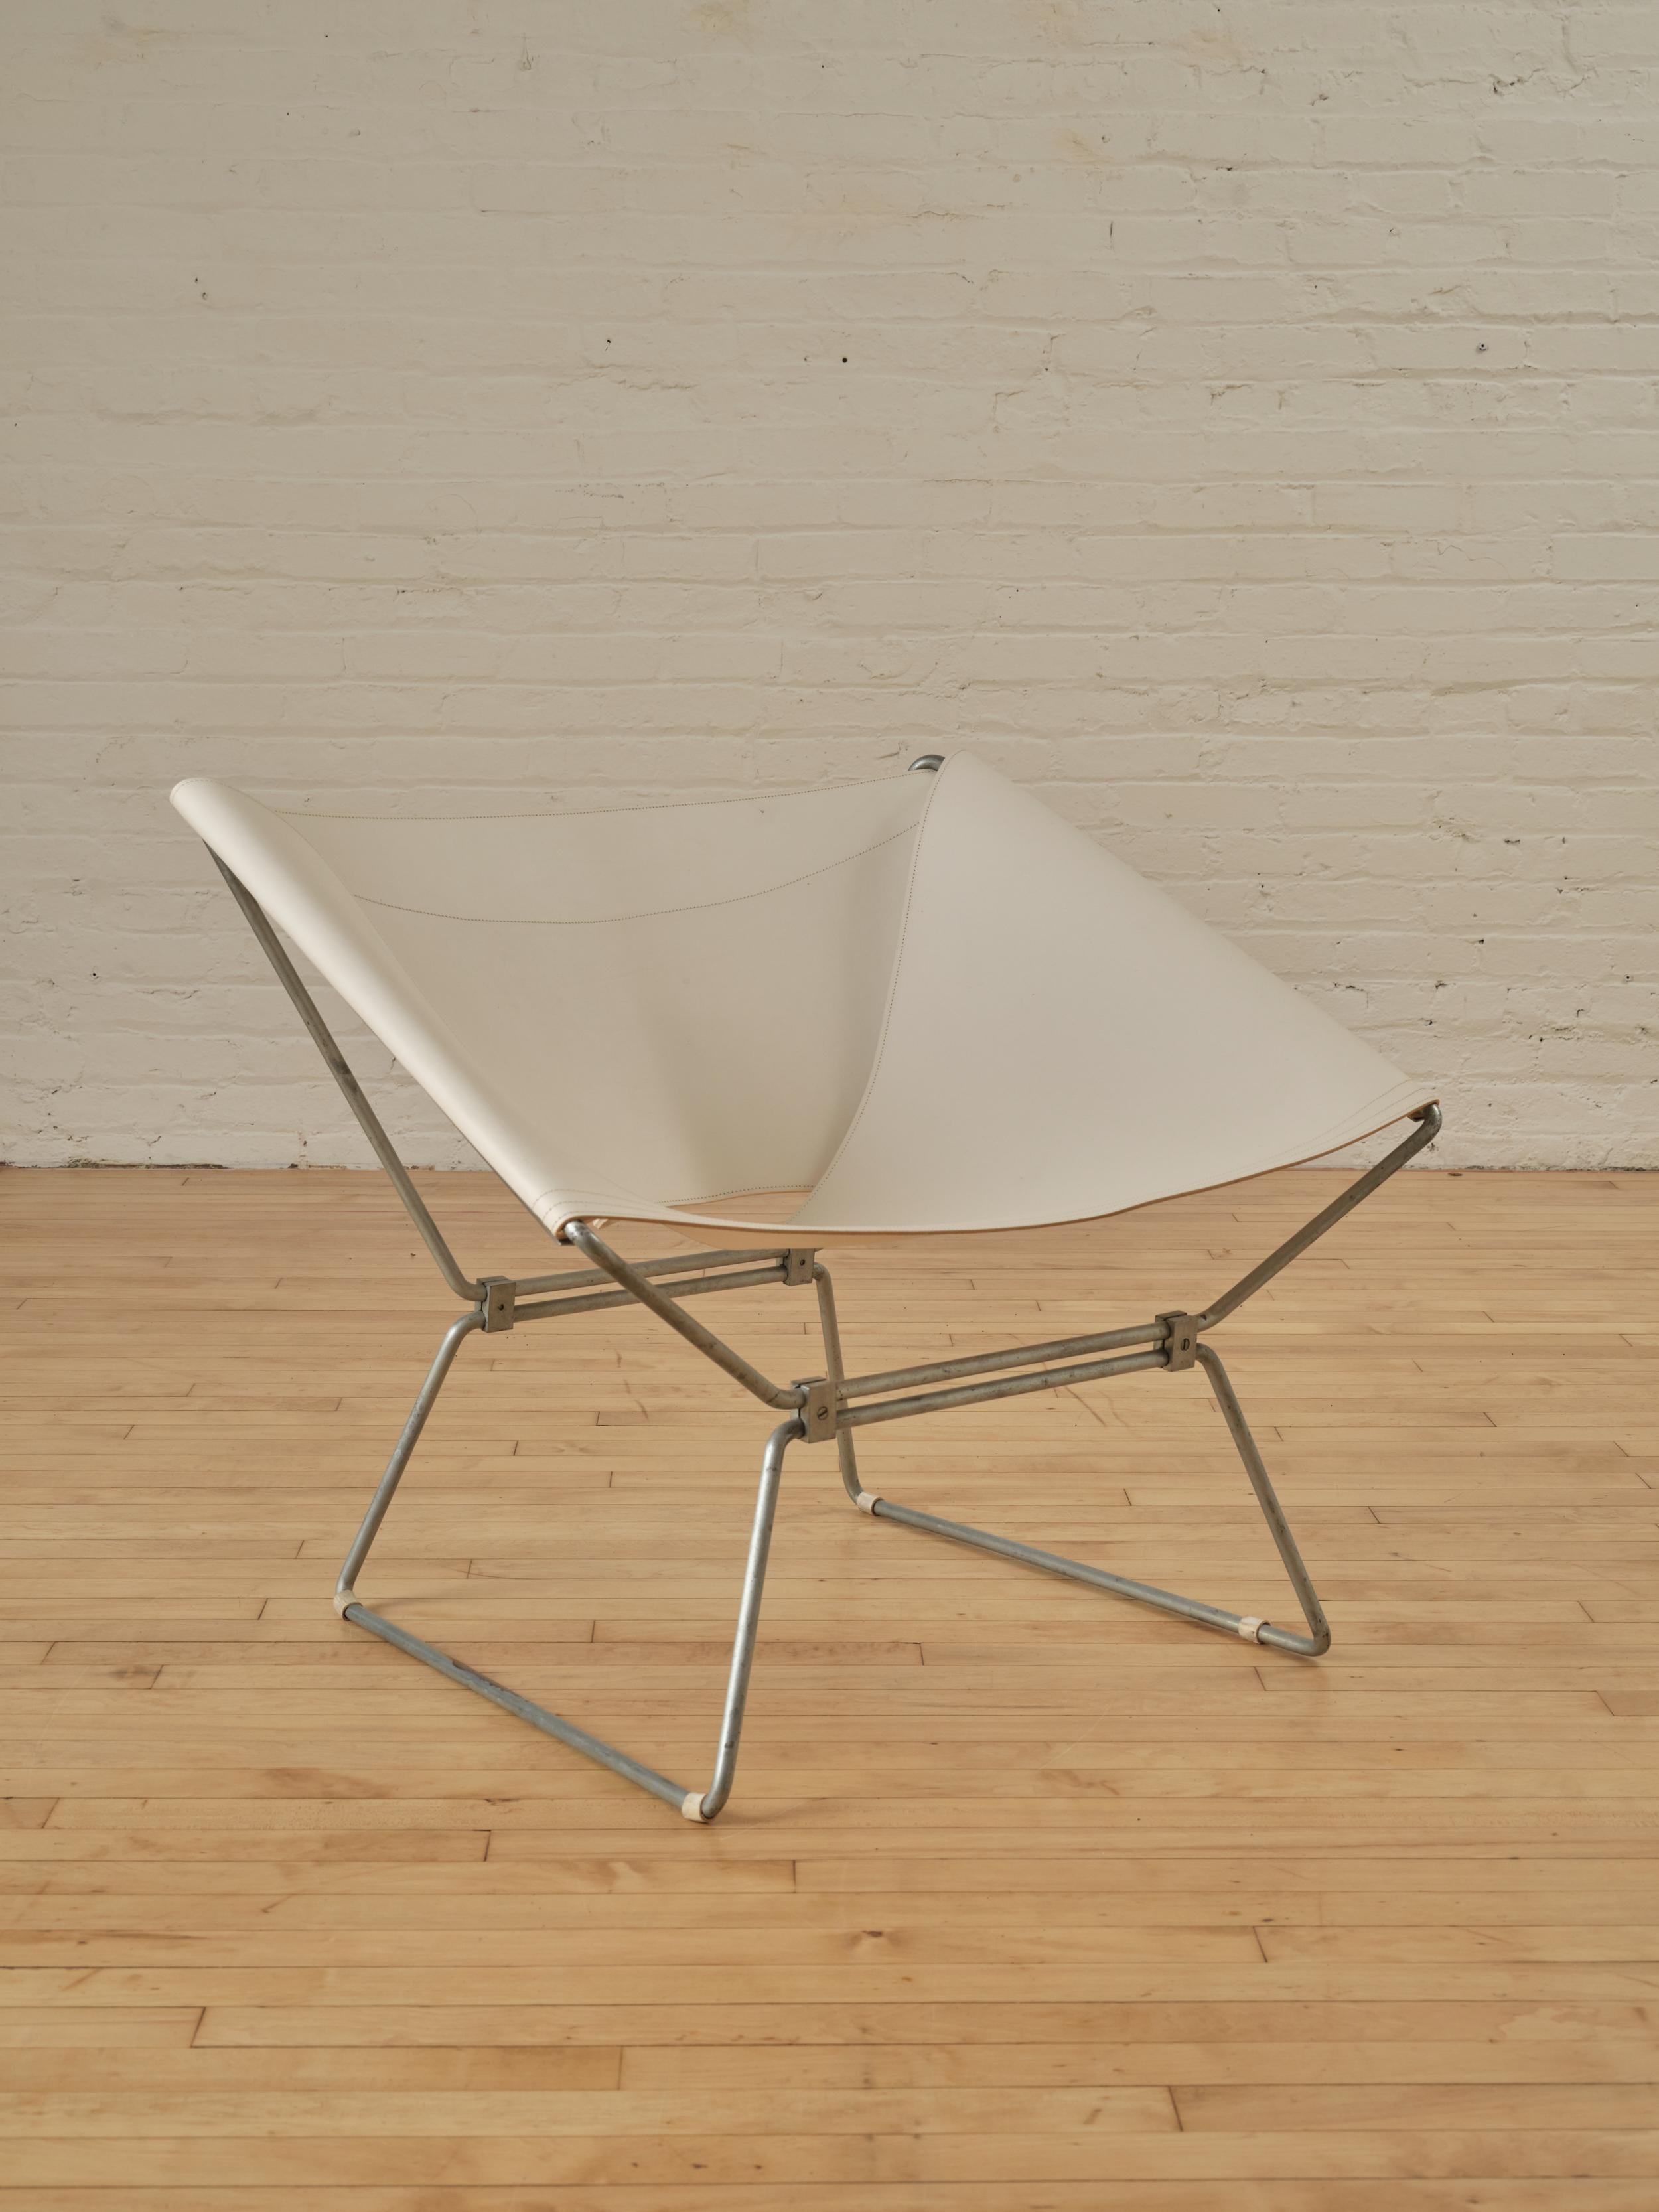 Steel Anneau Chair by Pierre Paulin for AP Polak (Model Ap-14) For Sale